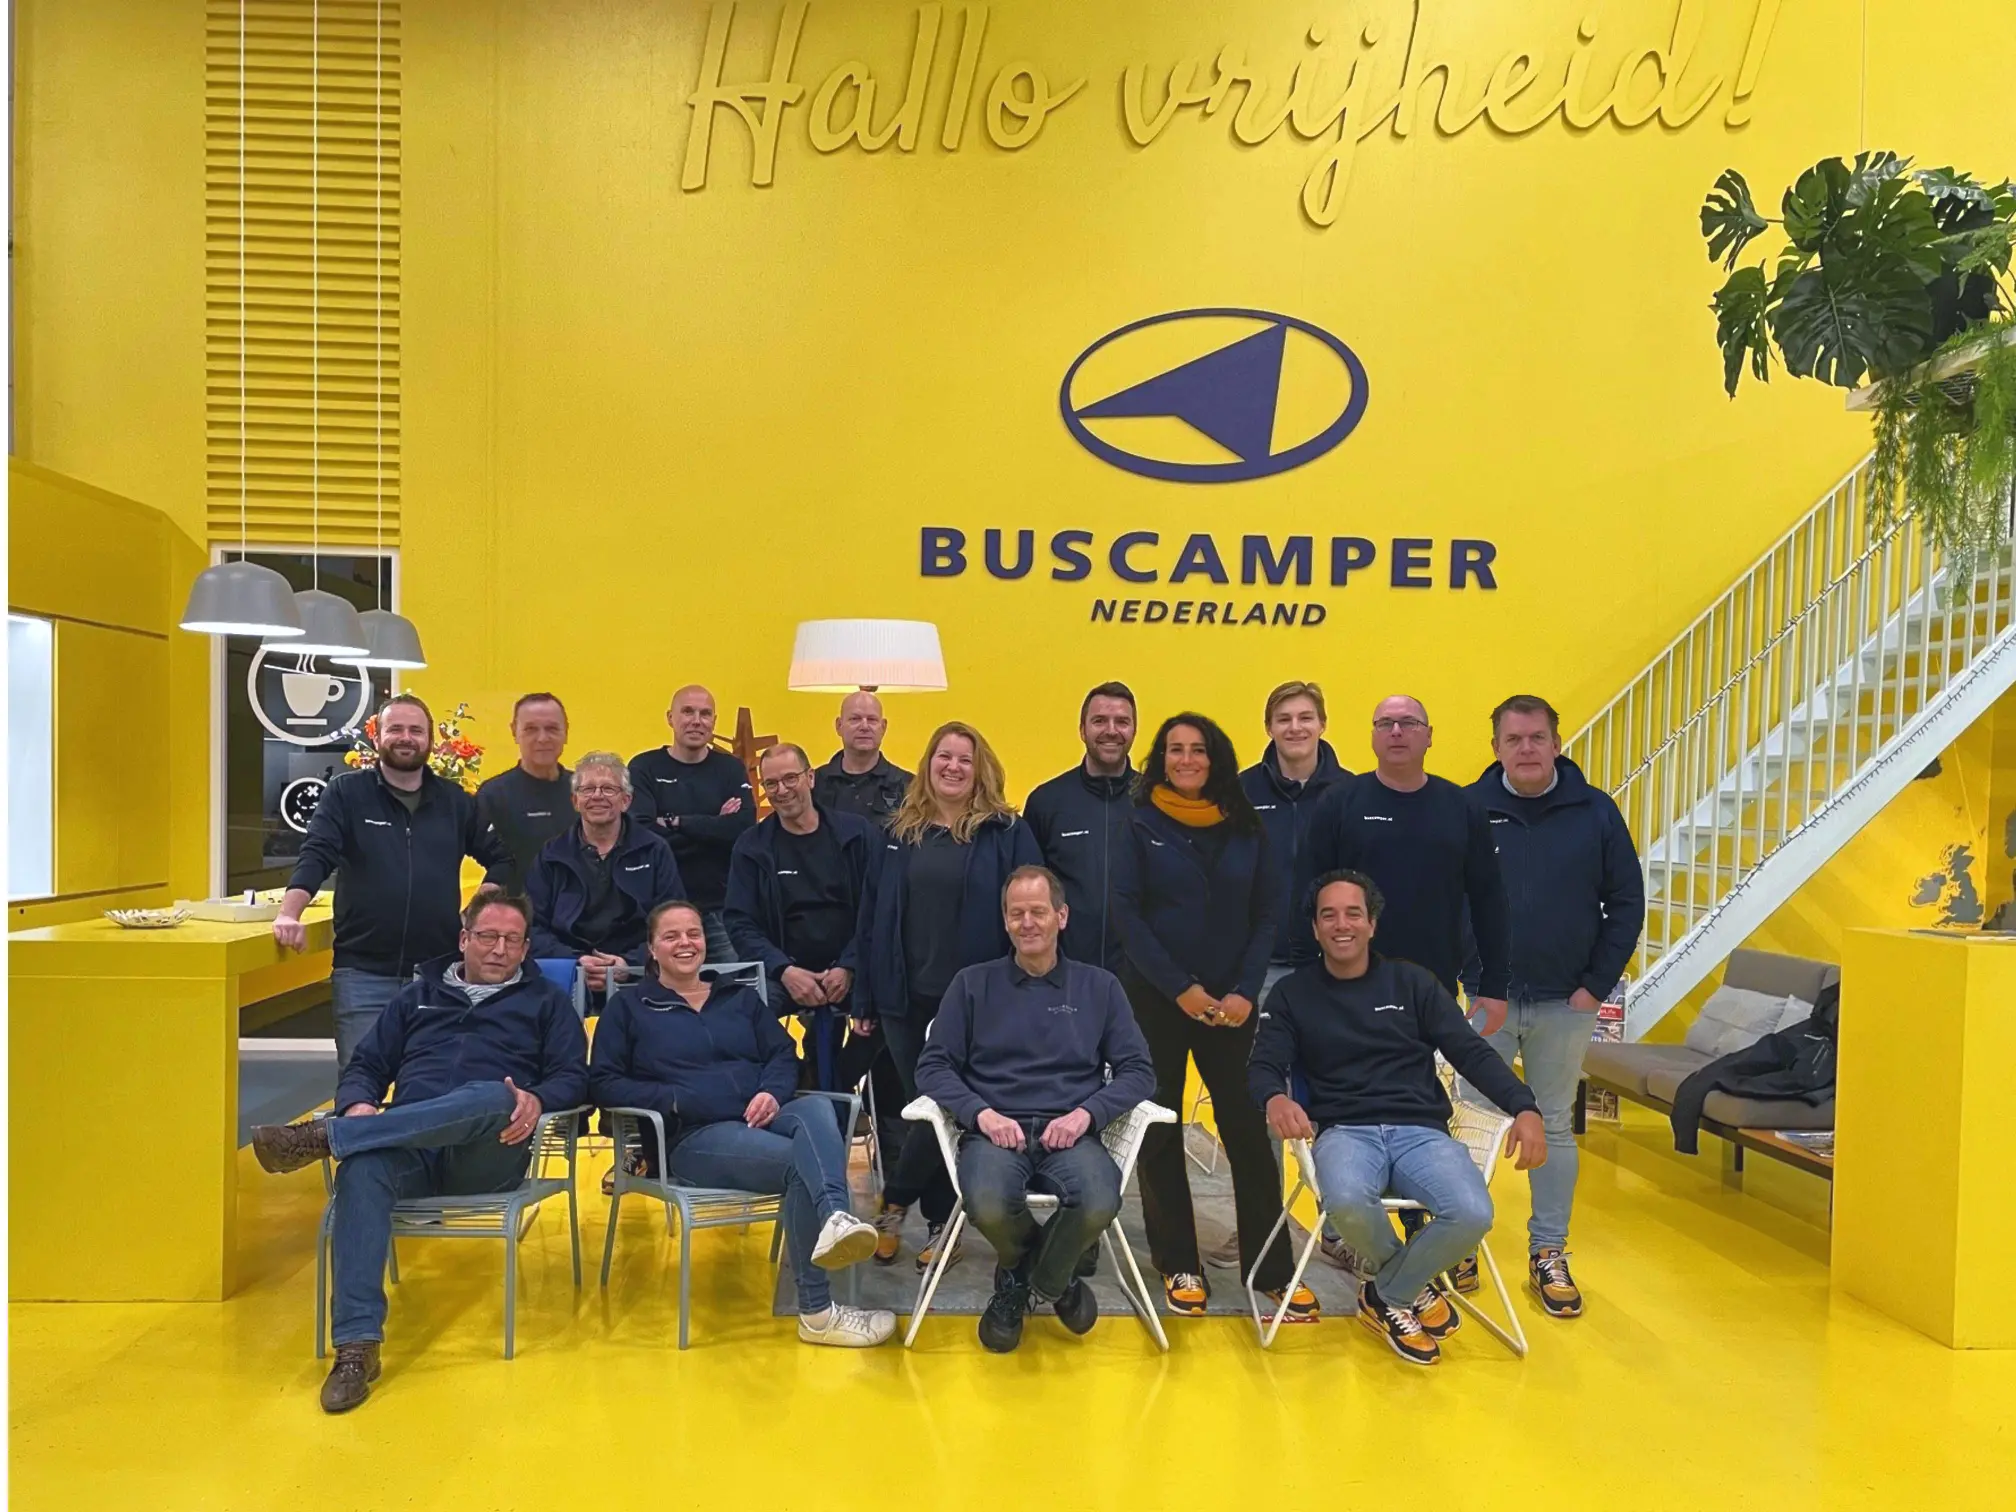 Contact het Buscamper Nederland team